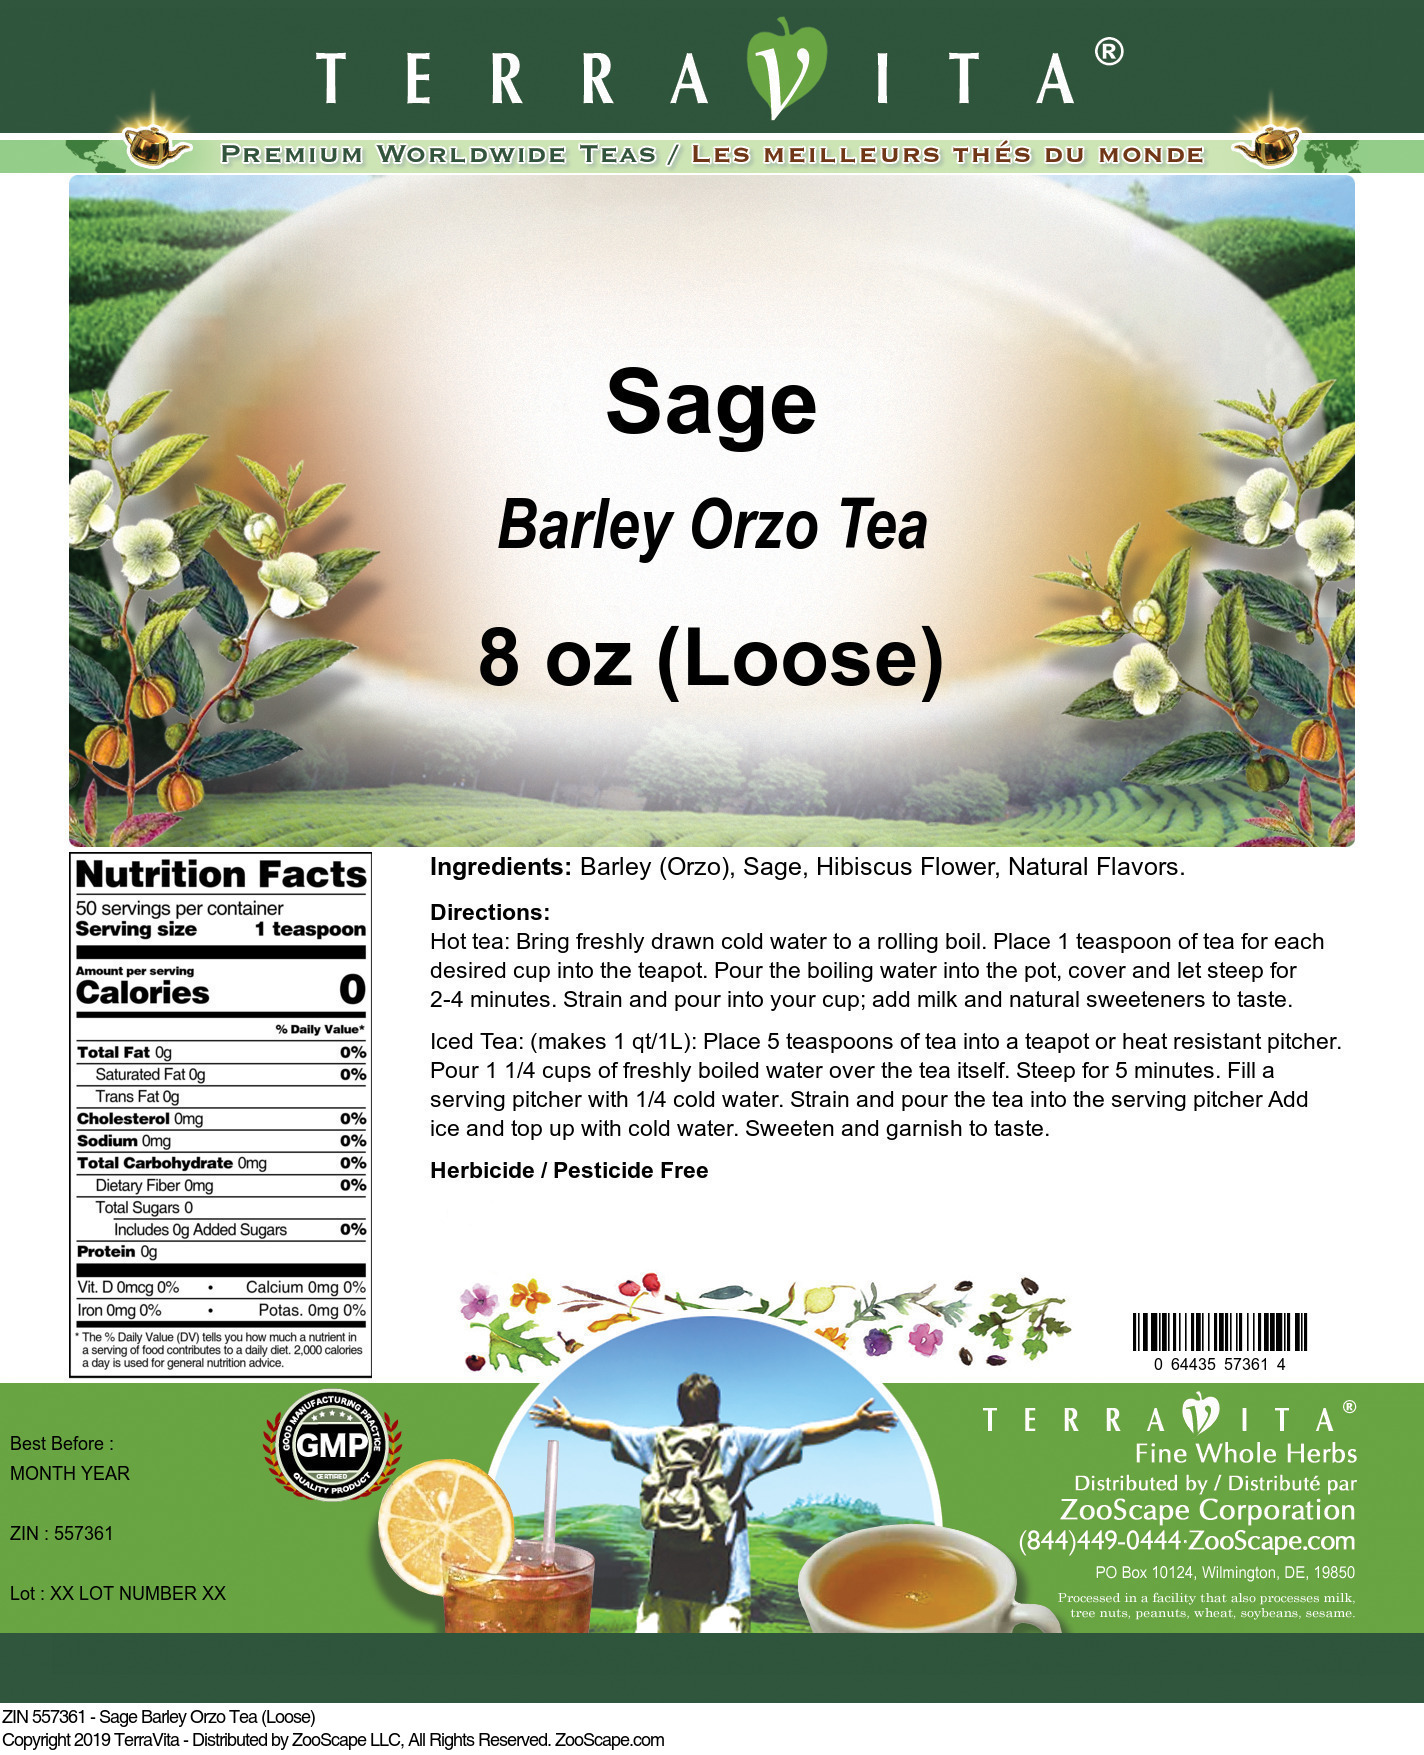 Sage Barley Orzo Tea (Loose) - Label